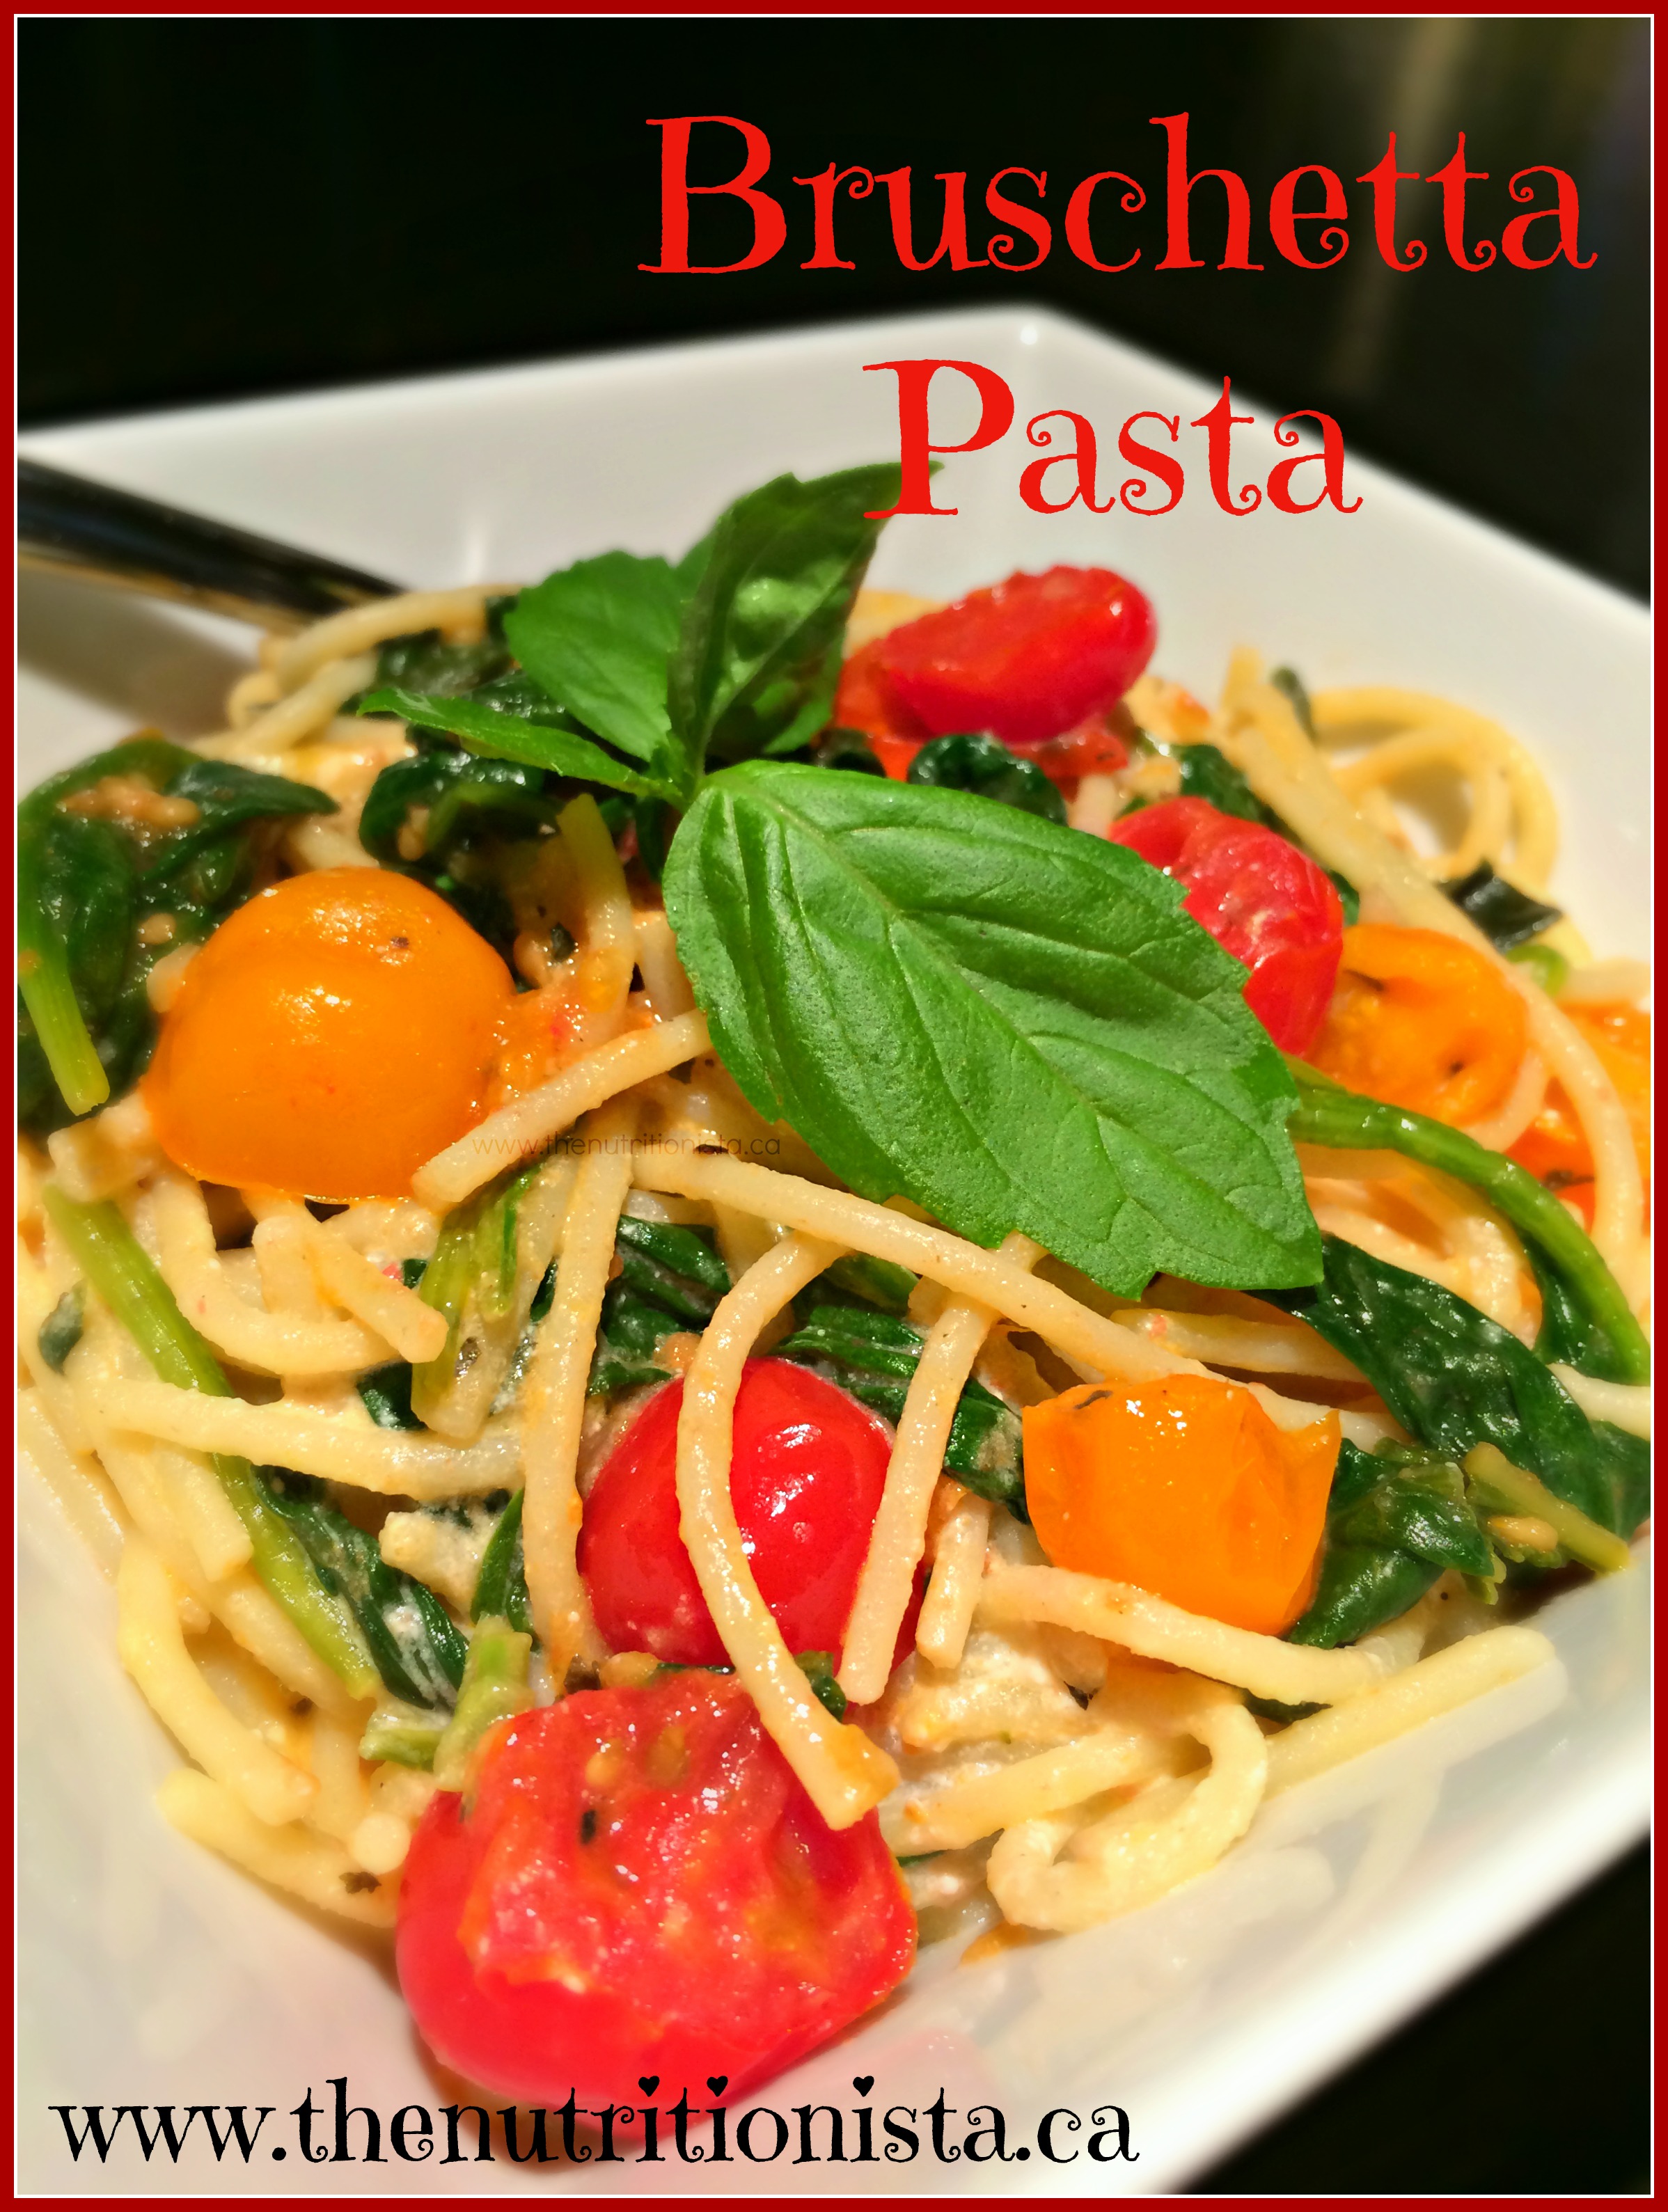 Ultimate gluten free bruschetta pasta - ready in 15 minutes! Via @bcnutritionista